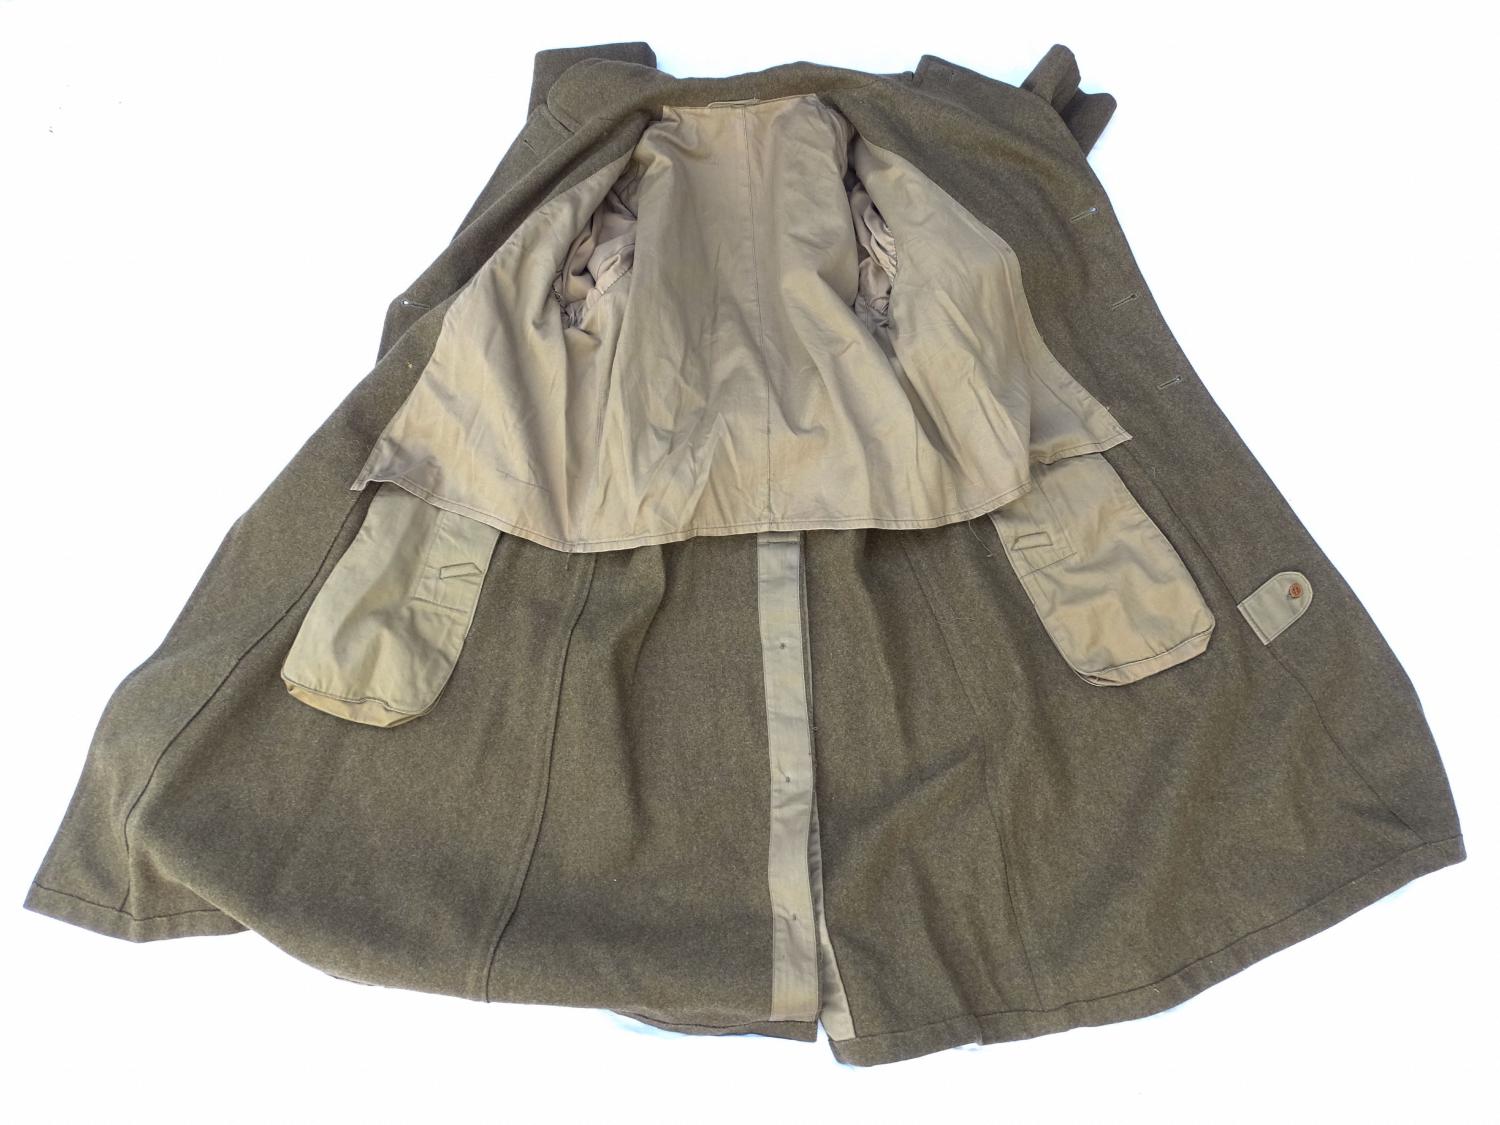 Manteau US Overcoat wool melton Taille 36L  1943